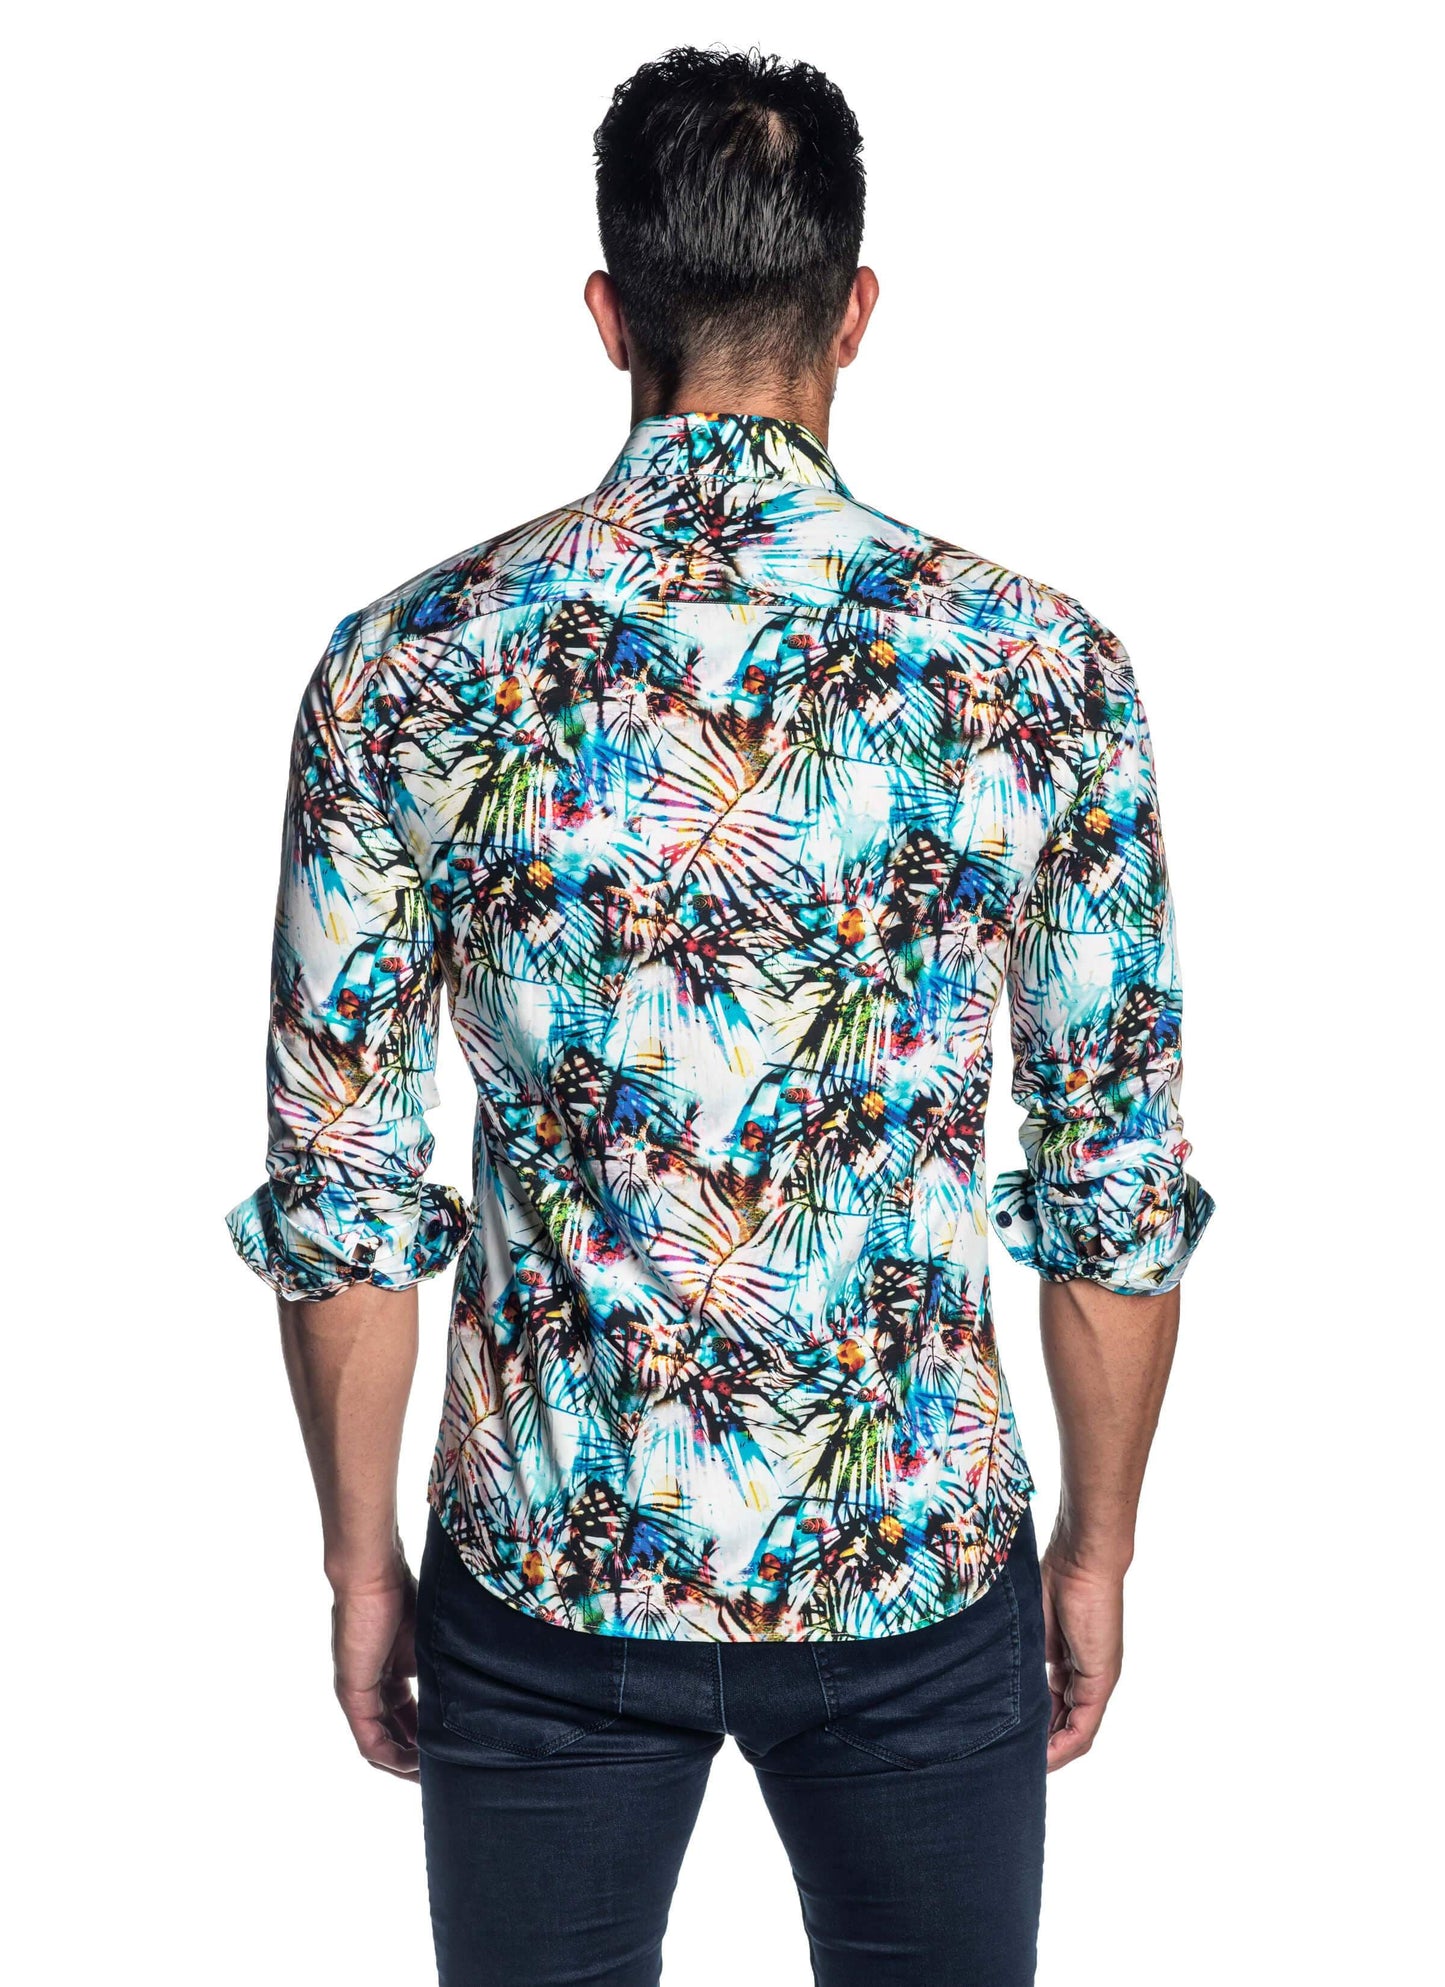 Multicolor Hawaiian Shirt for Men T-2045 - Jared Lang